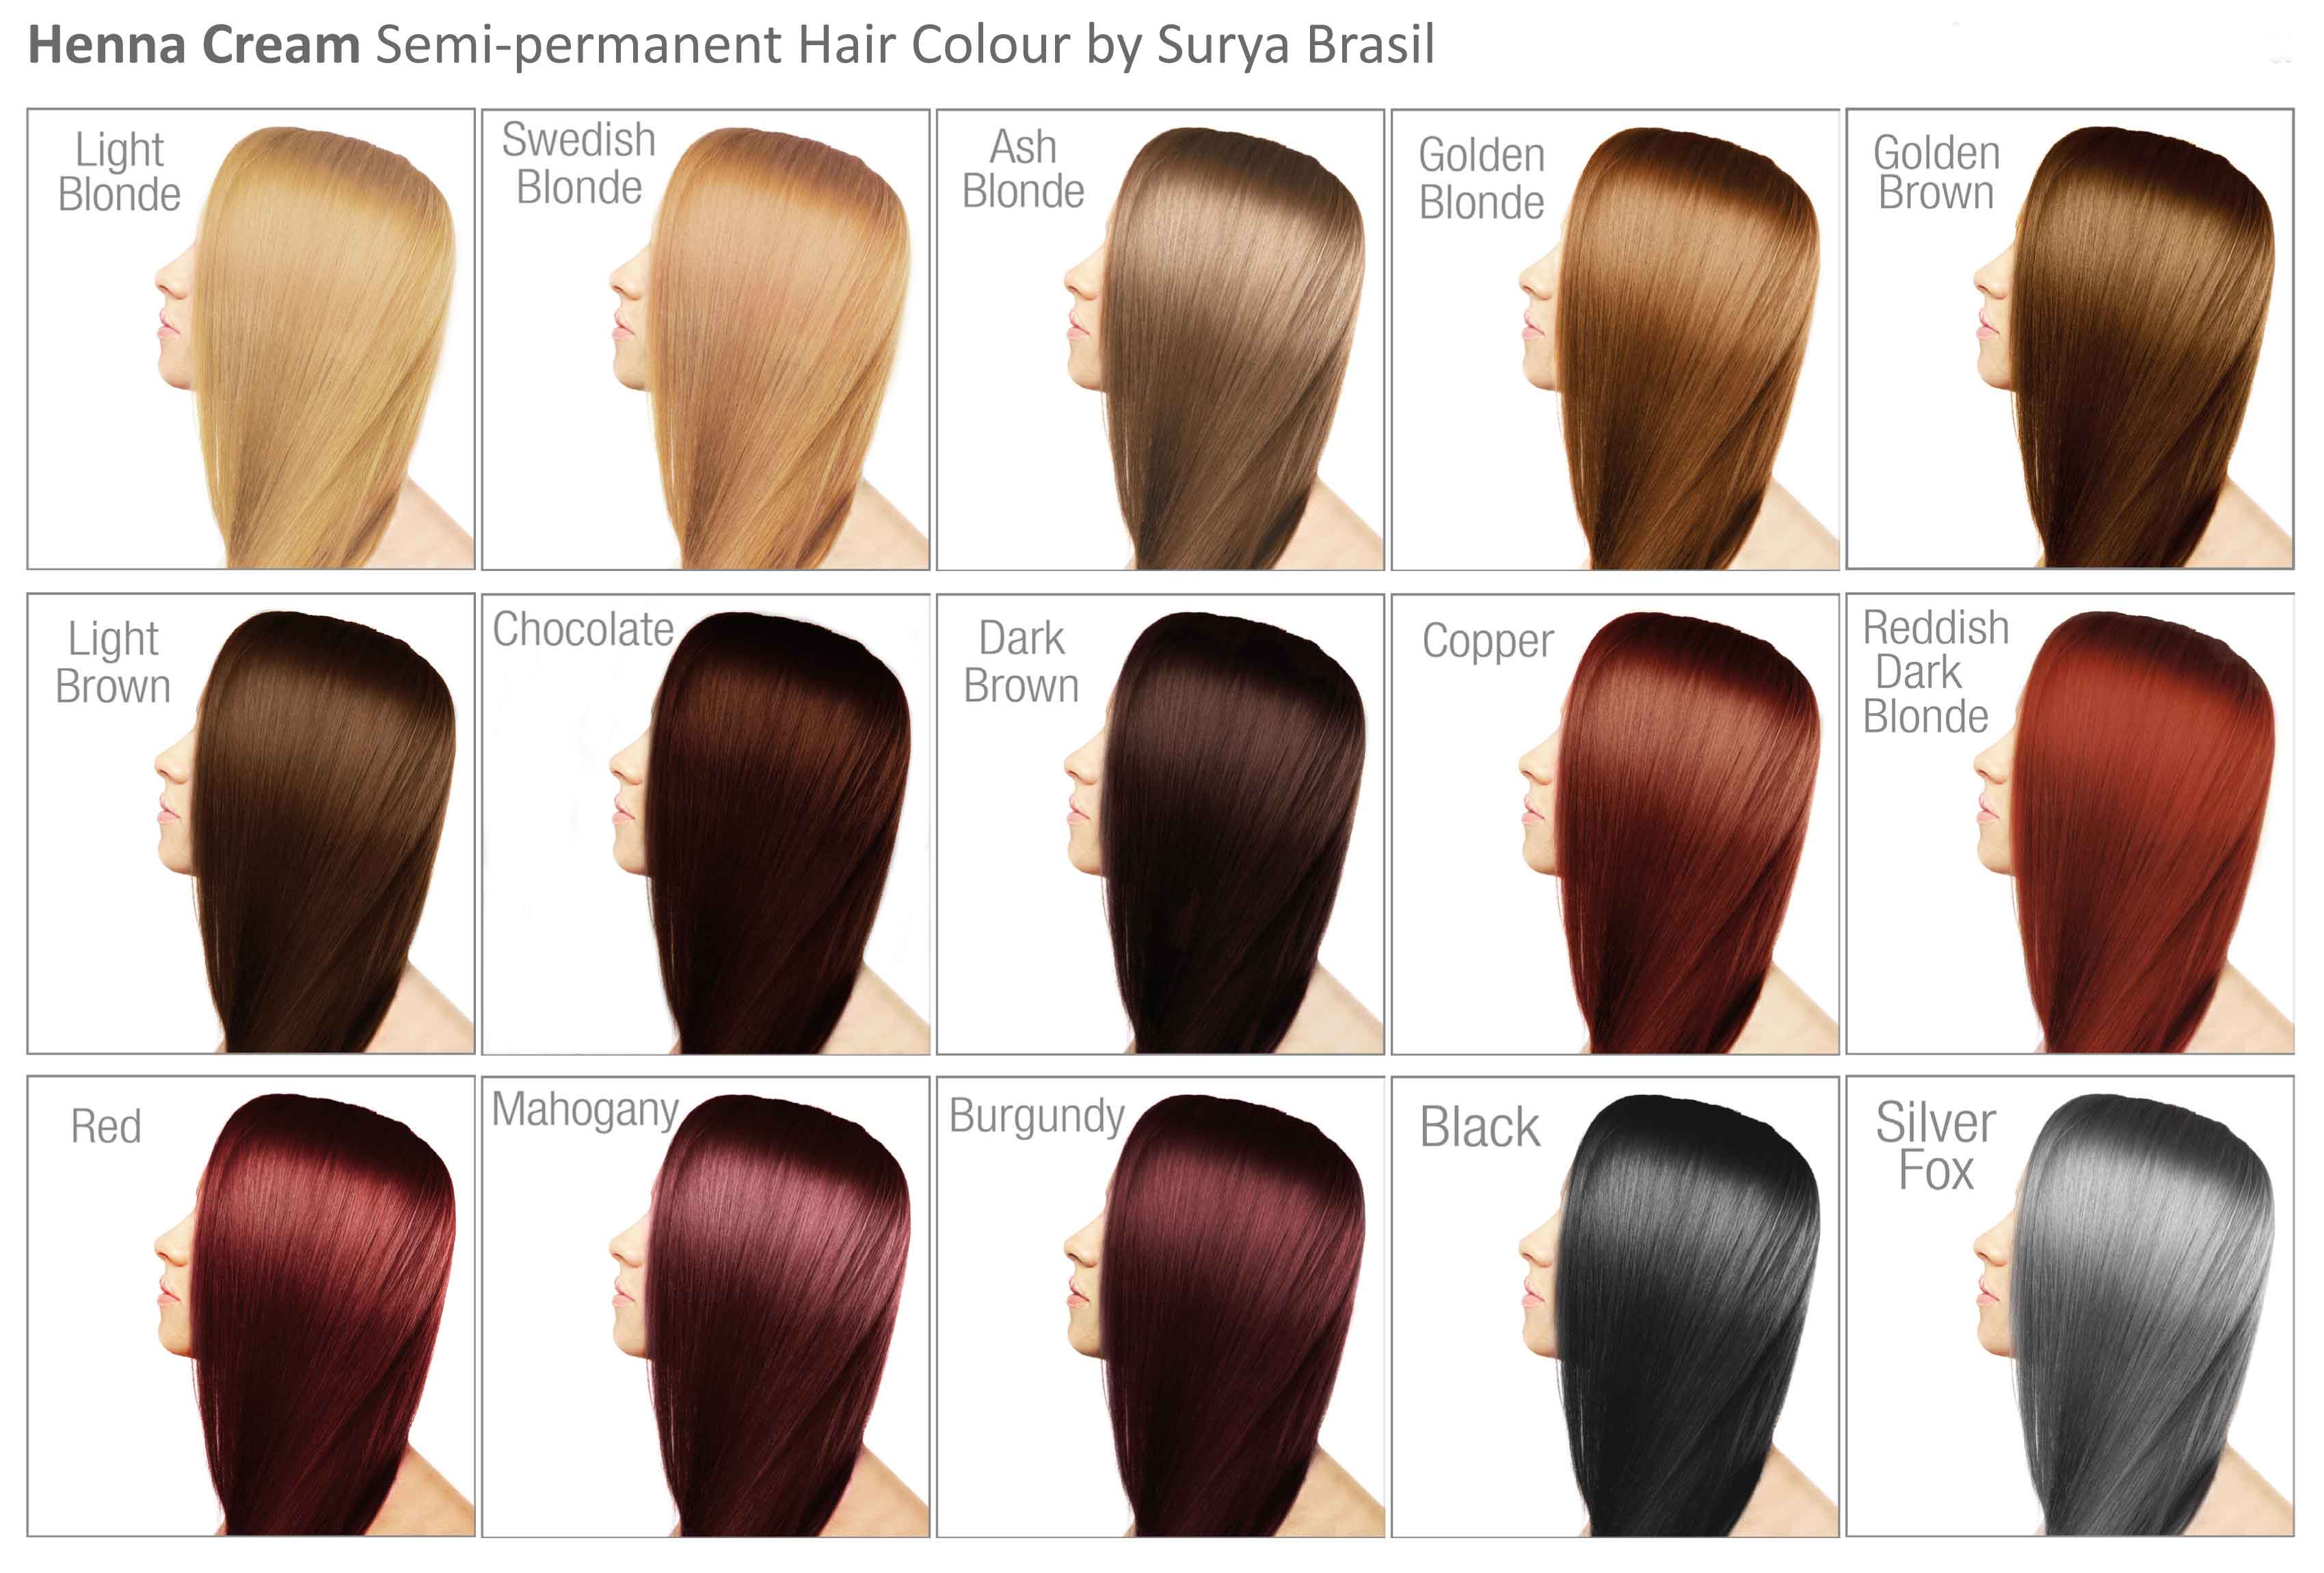 Natuuurlijke henna haarverf kleurenkaart Surya Brasil